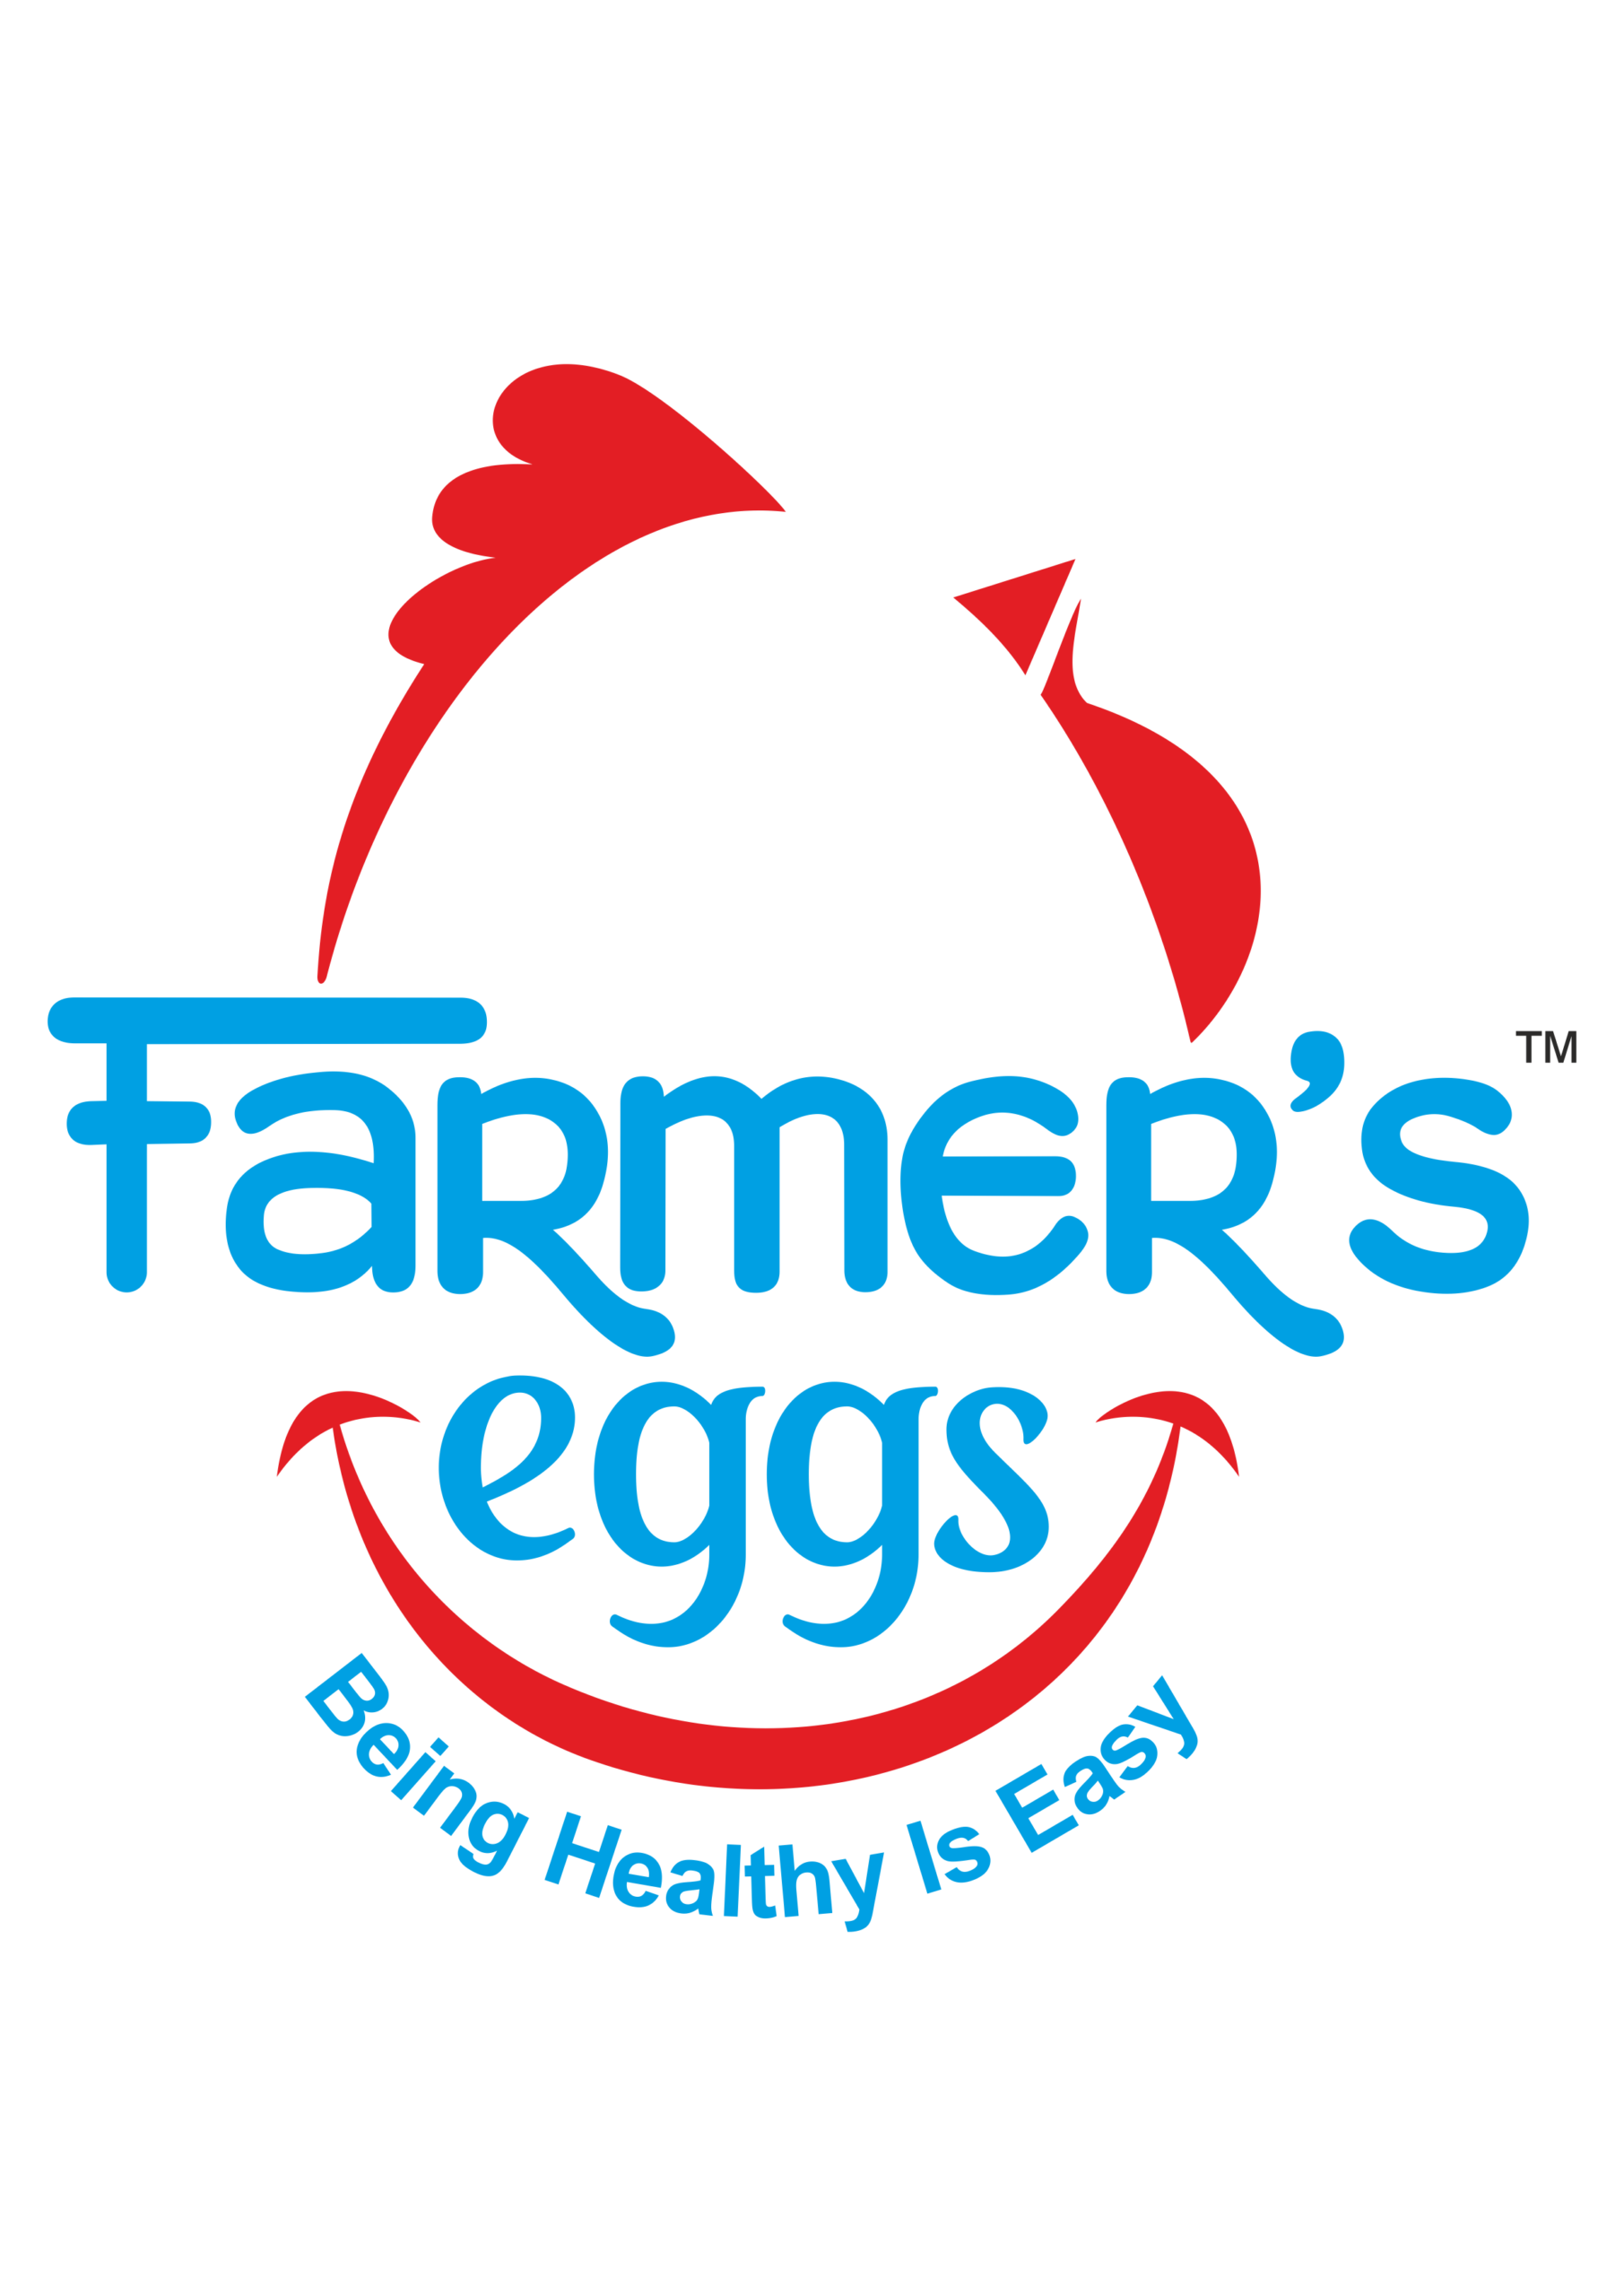 Farmers Eggs